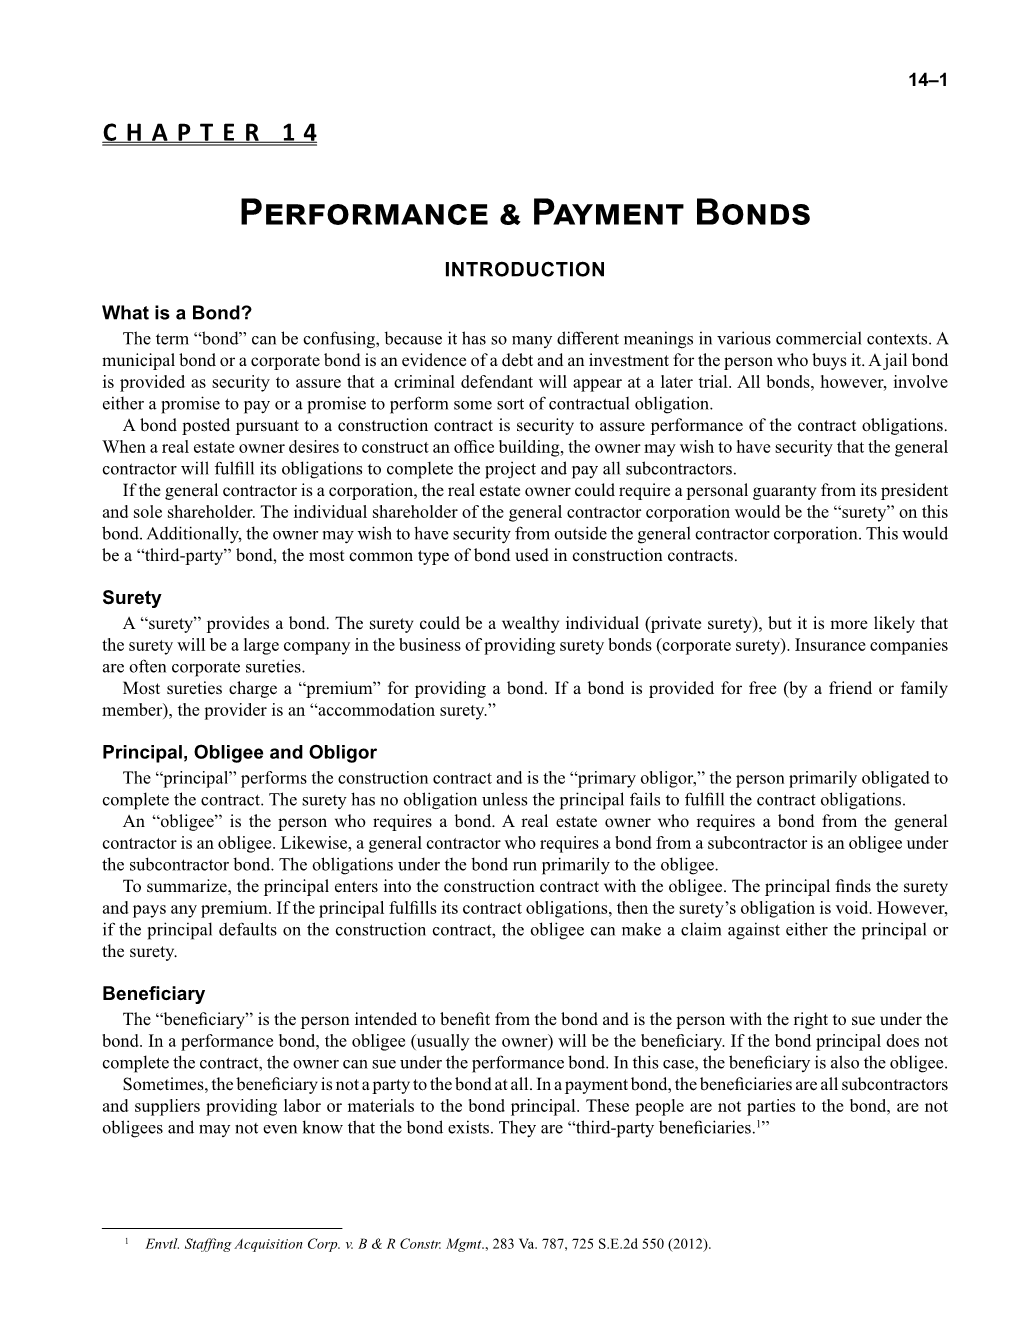 Performance & Payment Bonds